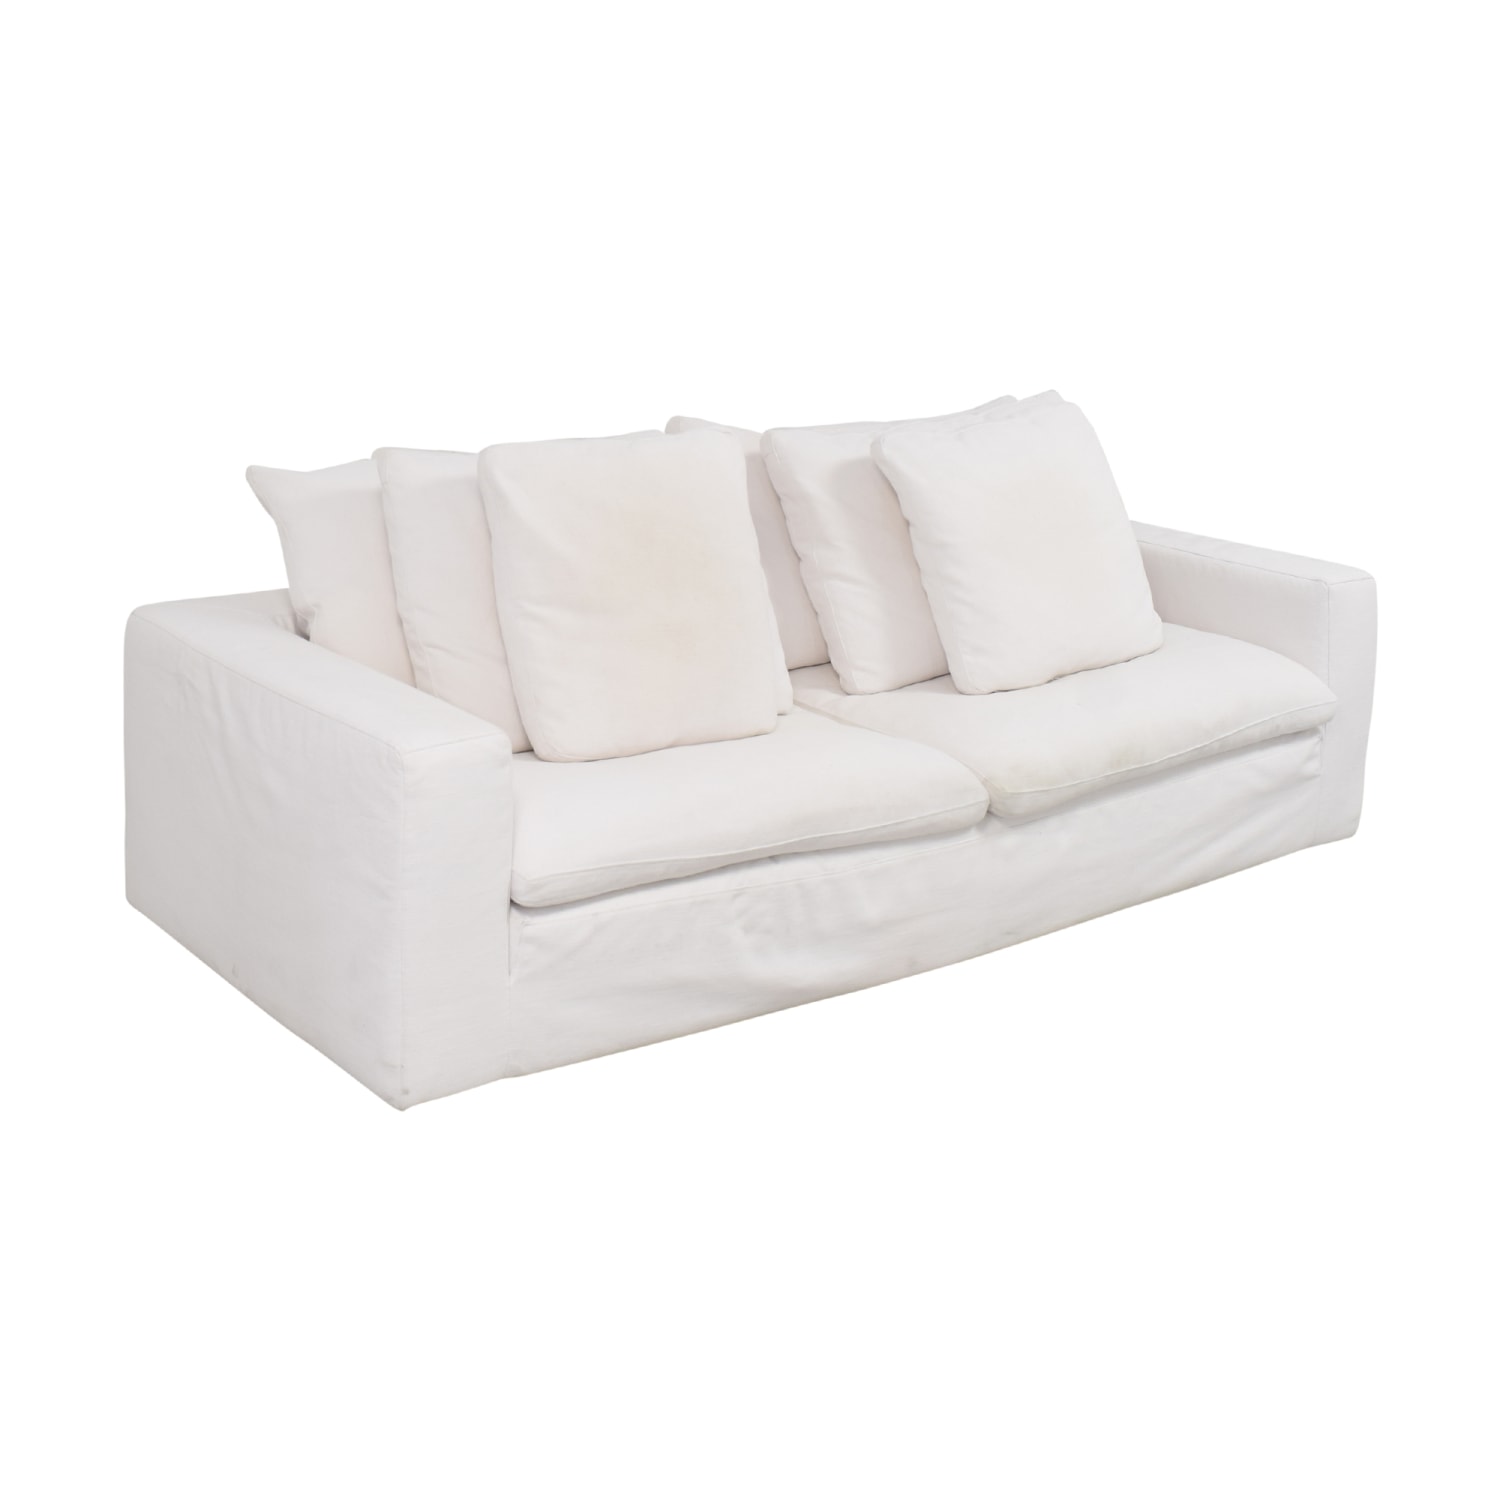 https://res.cloudinary.com/dkqtxtobb/image/upload/f_auto,q_auto:best,w_1500/product-assets/163607/restoration-hardware/sofas/classic-sofas/used-restoration-hardware-cloud-two-seat-cushion-sofa.jpeg